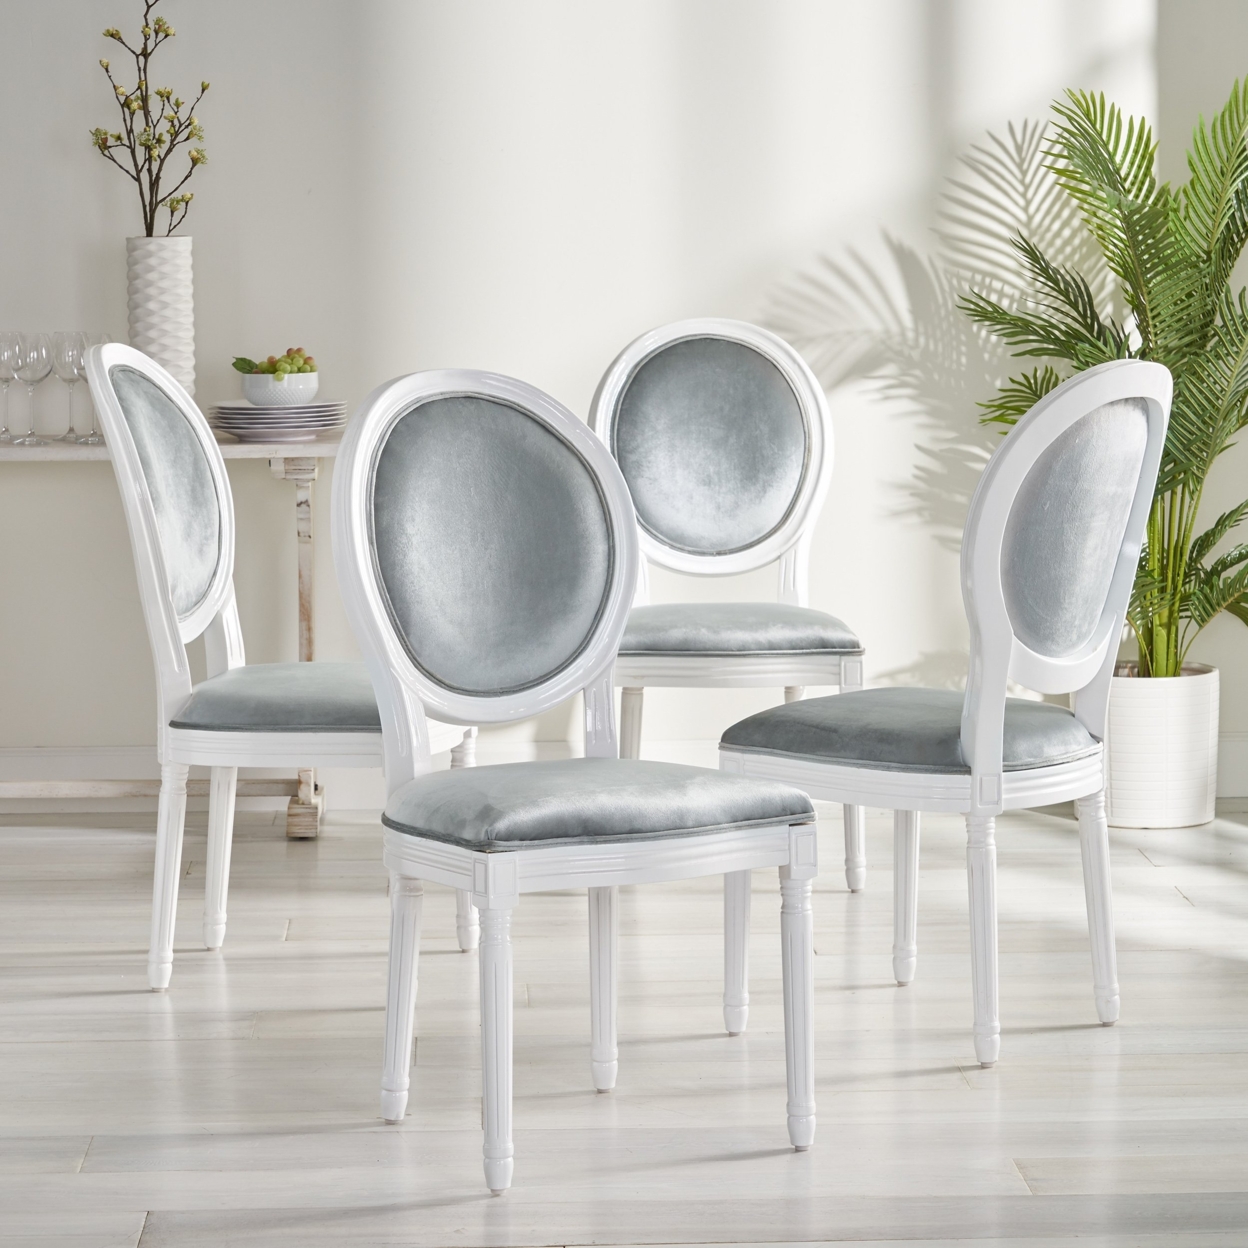 Lariya French Country Dining Chairs (Set Of 4) - Light Gray/gloss White